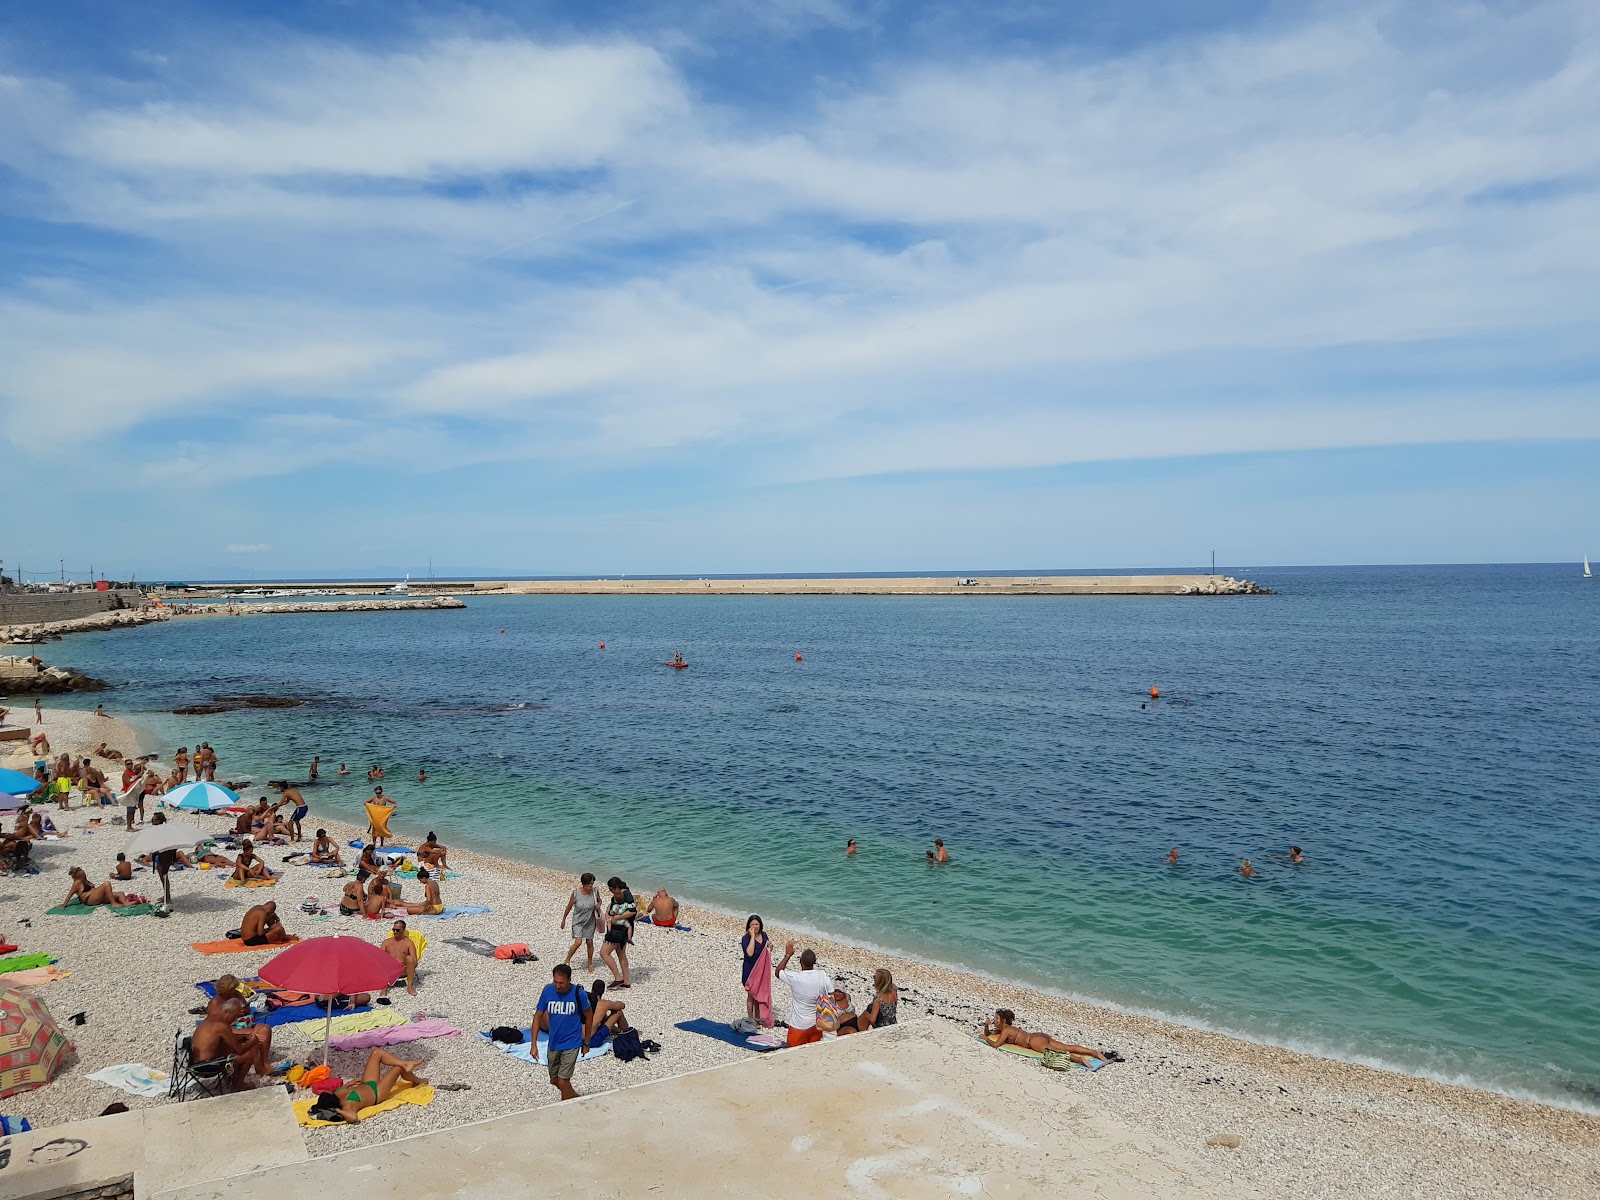 Foto von Spiaggia del Macello mit heller kies Oberfläche